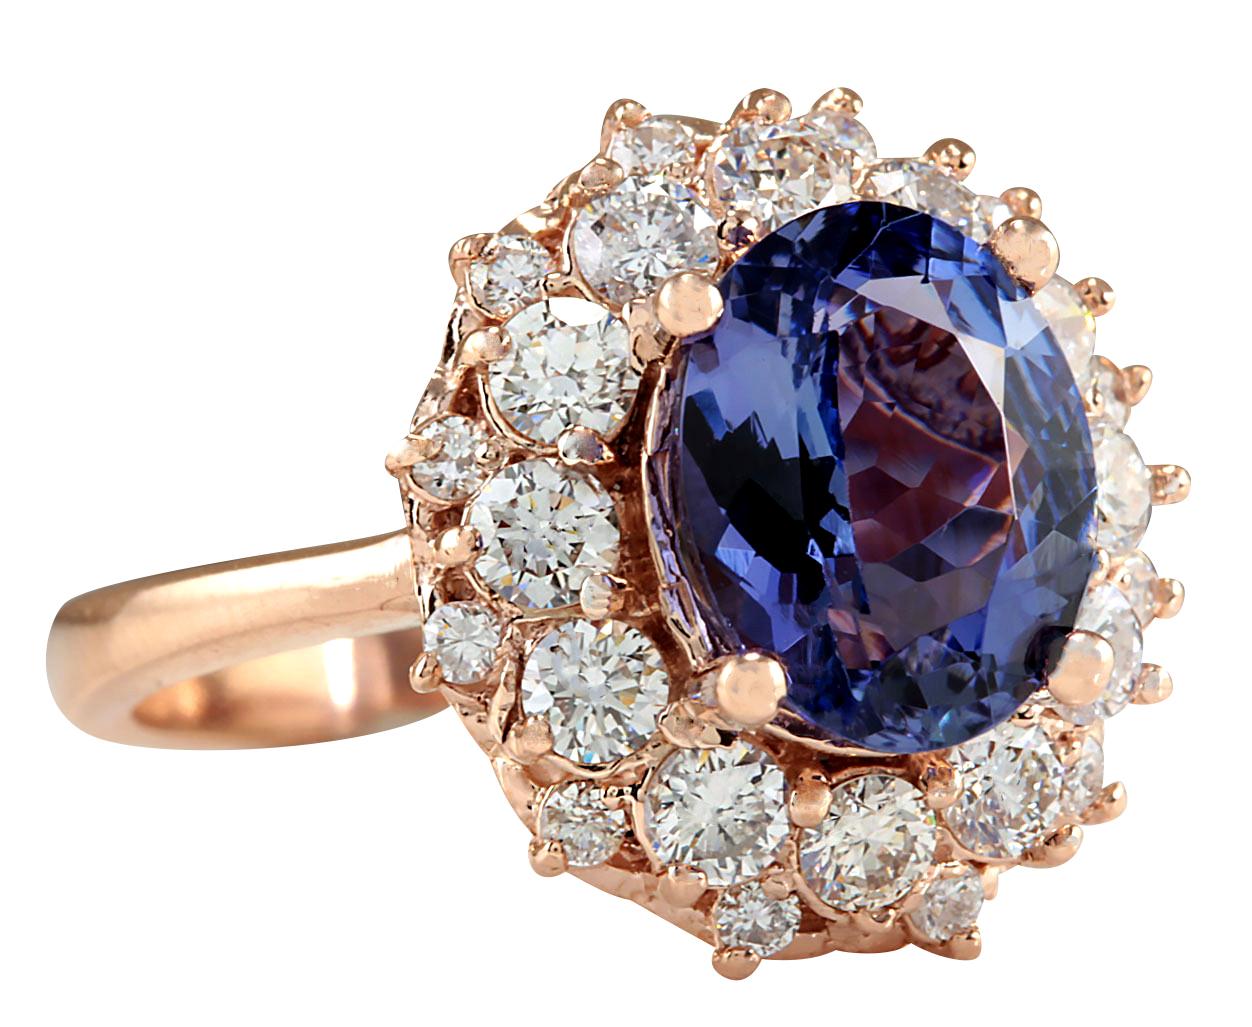 Stamped: 14K Rose Gold
Total Ring Weight: 5.4 Grams
Total Natural Tanzanite Weight is 2.66 Carat (Measures: 10.00x8.00 mm)
Color: Blue
Total Natural Diamond Weight is 1.50 Carat
Color: F-G, Clarity: VS2-SI1
Face Measures: 16.90x15.20 mm
Sku: